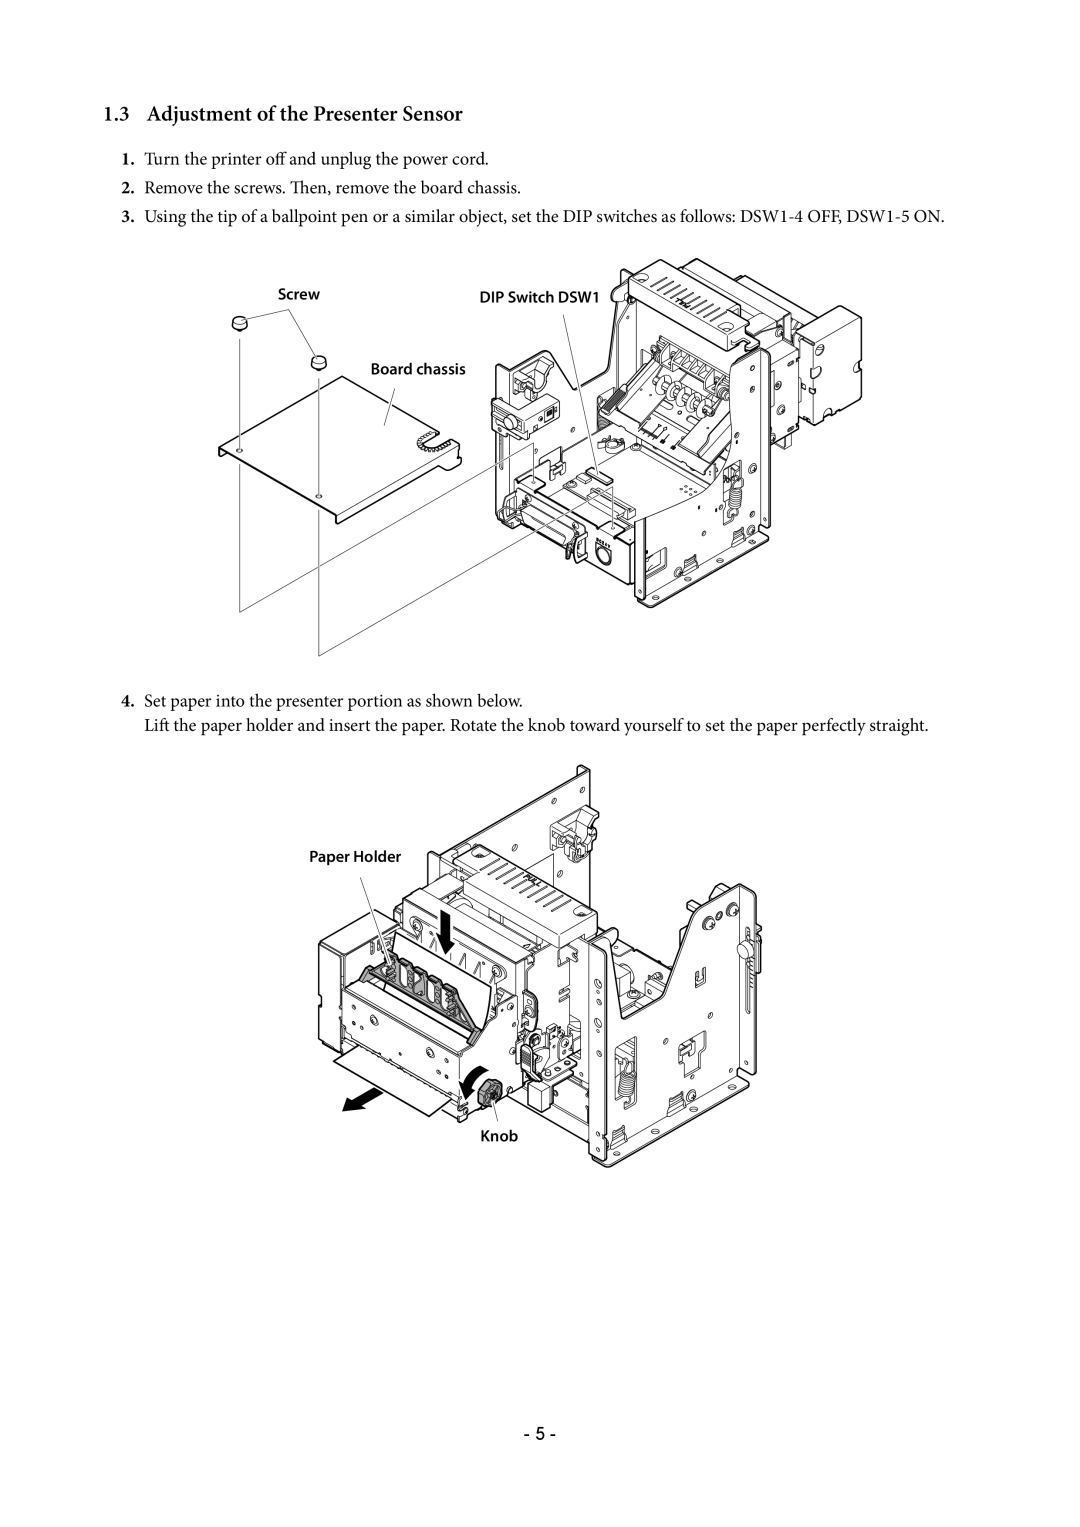 Star Micronics TUP500 technical manual Adjustment of the Presenter Sensor 